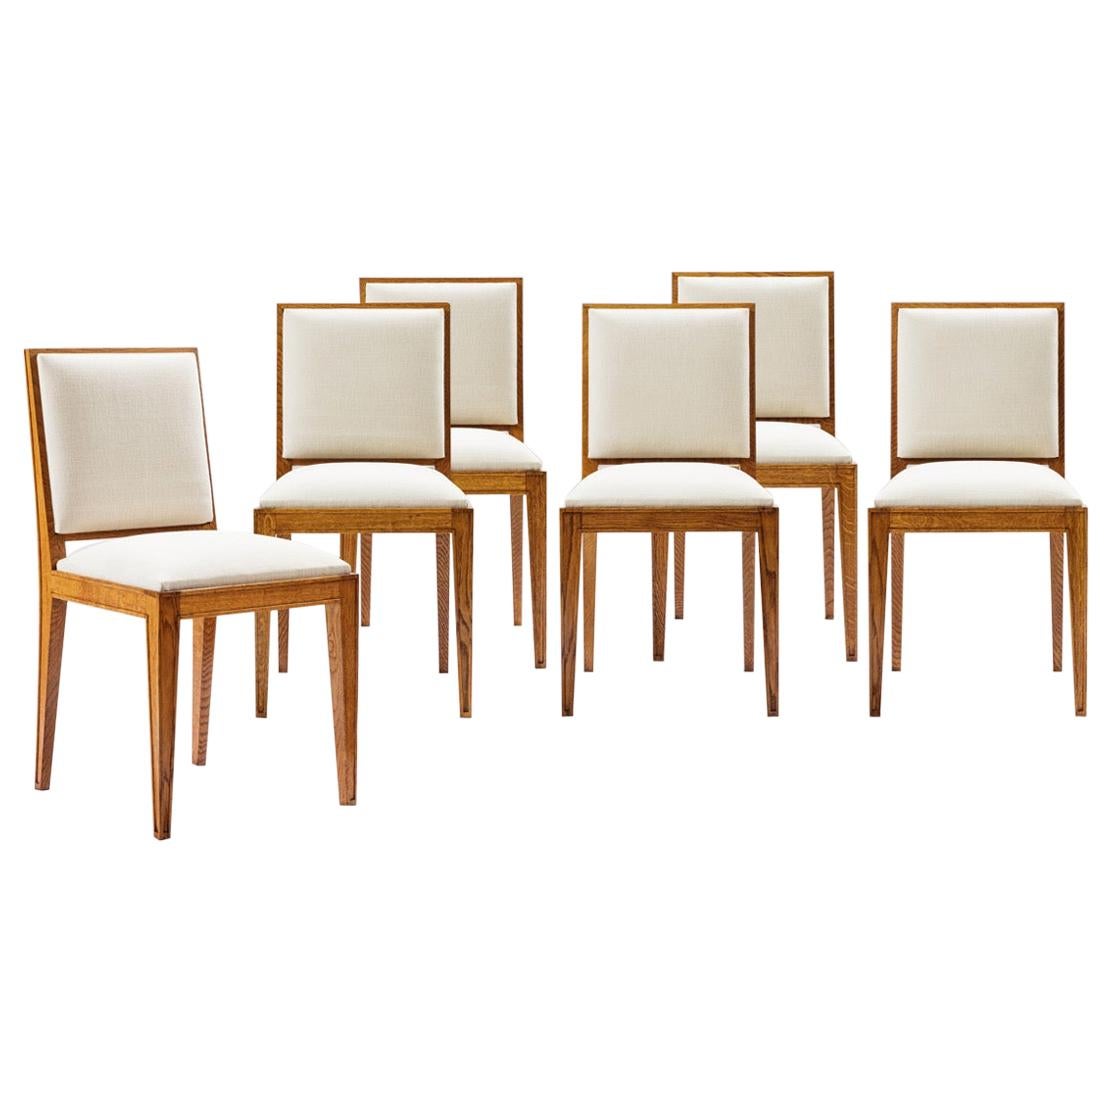 Jacques Adnet, Set of Six Oak Chairs, circa 1950